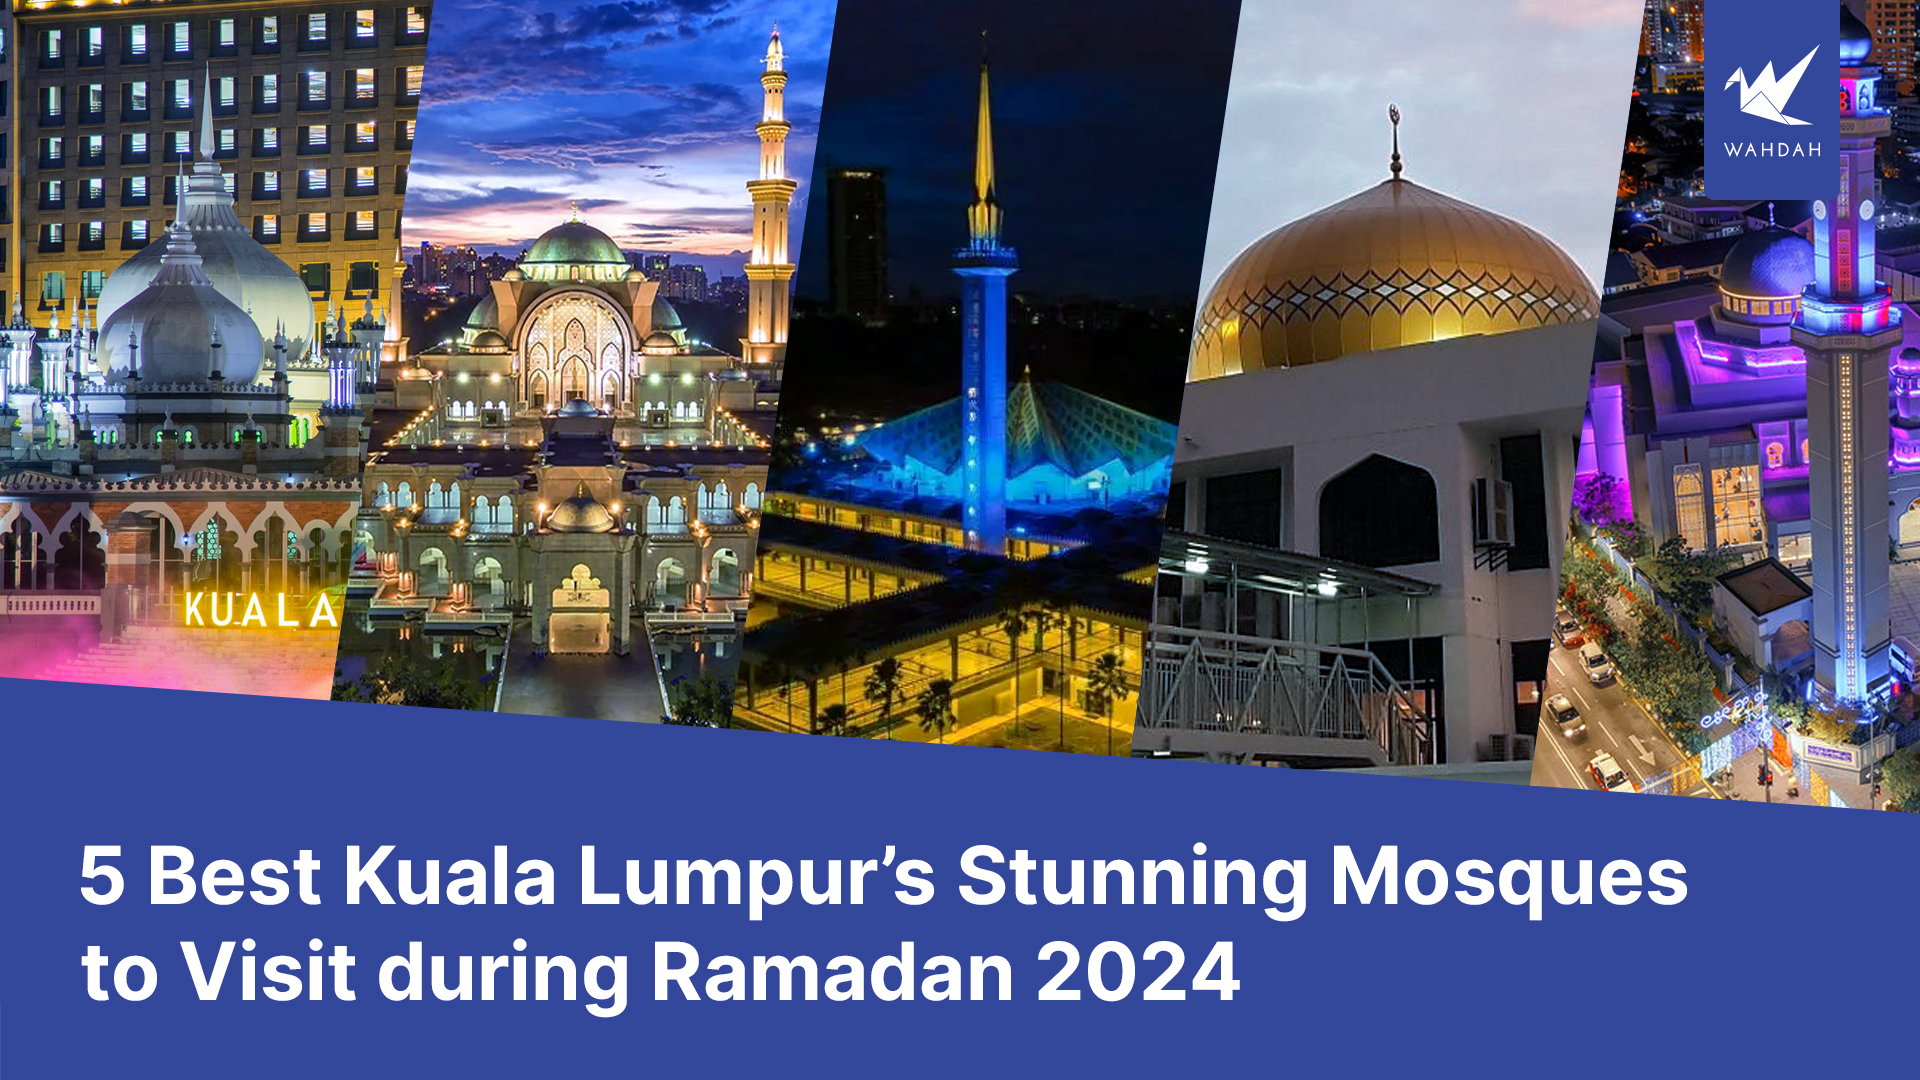 5 Best Kuala Lumpur’s Stunning Mosques to Visit during Ramadan 2024